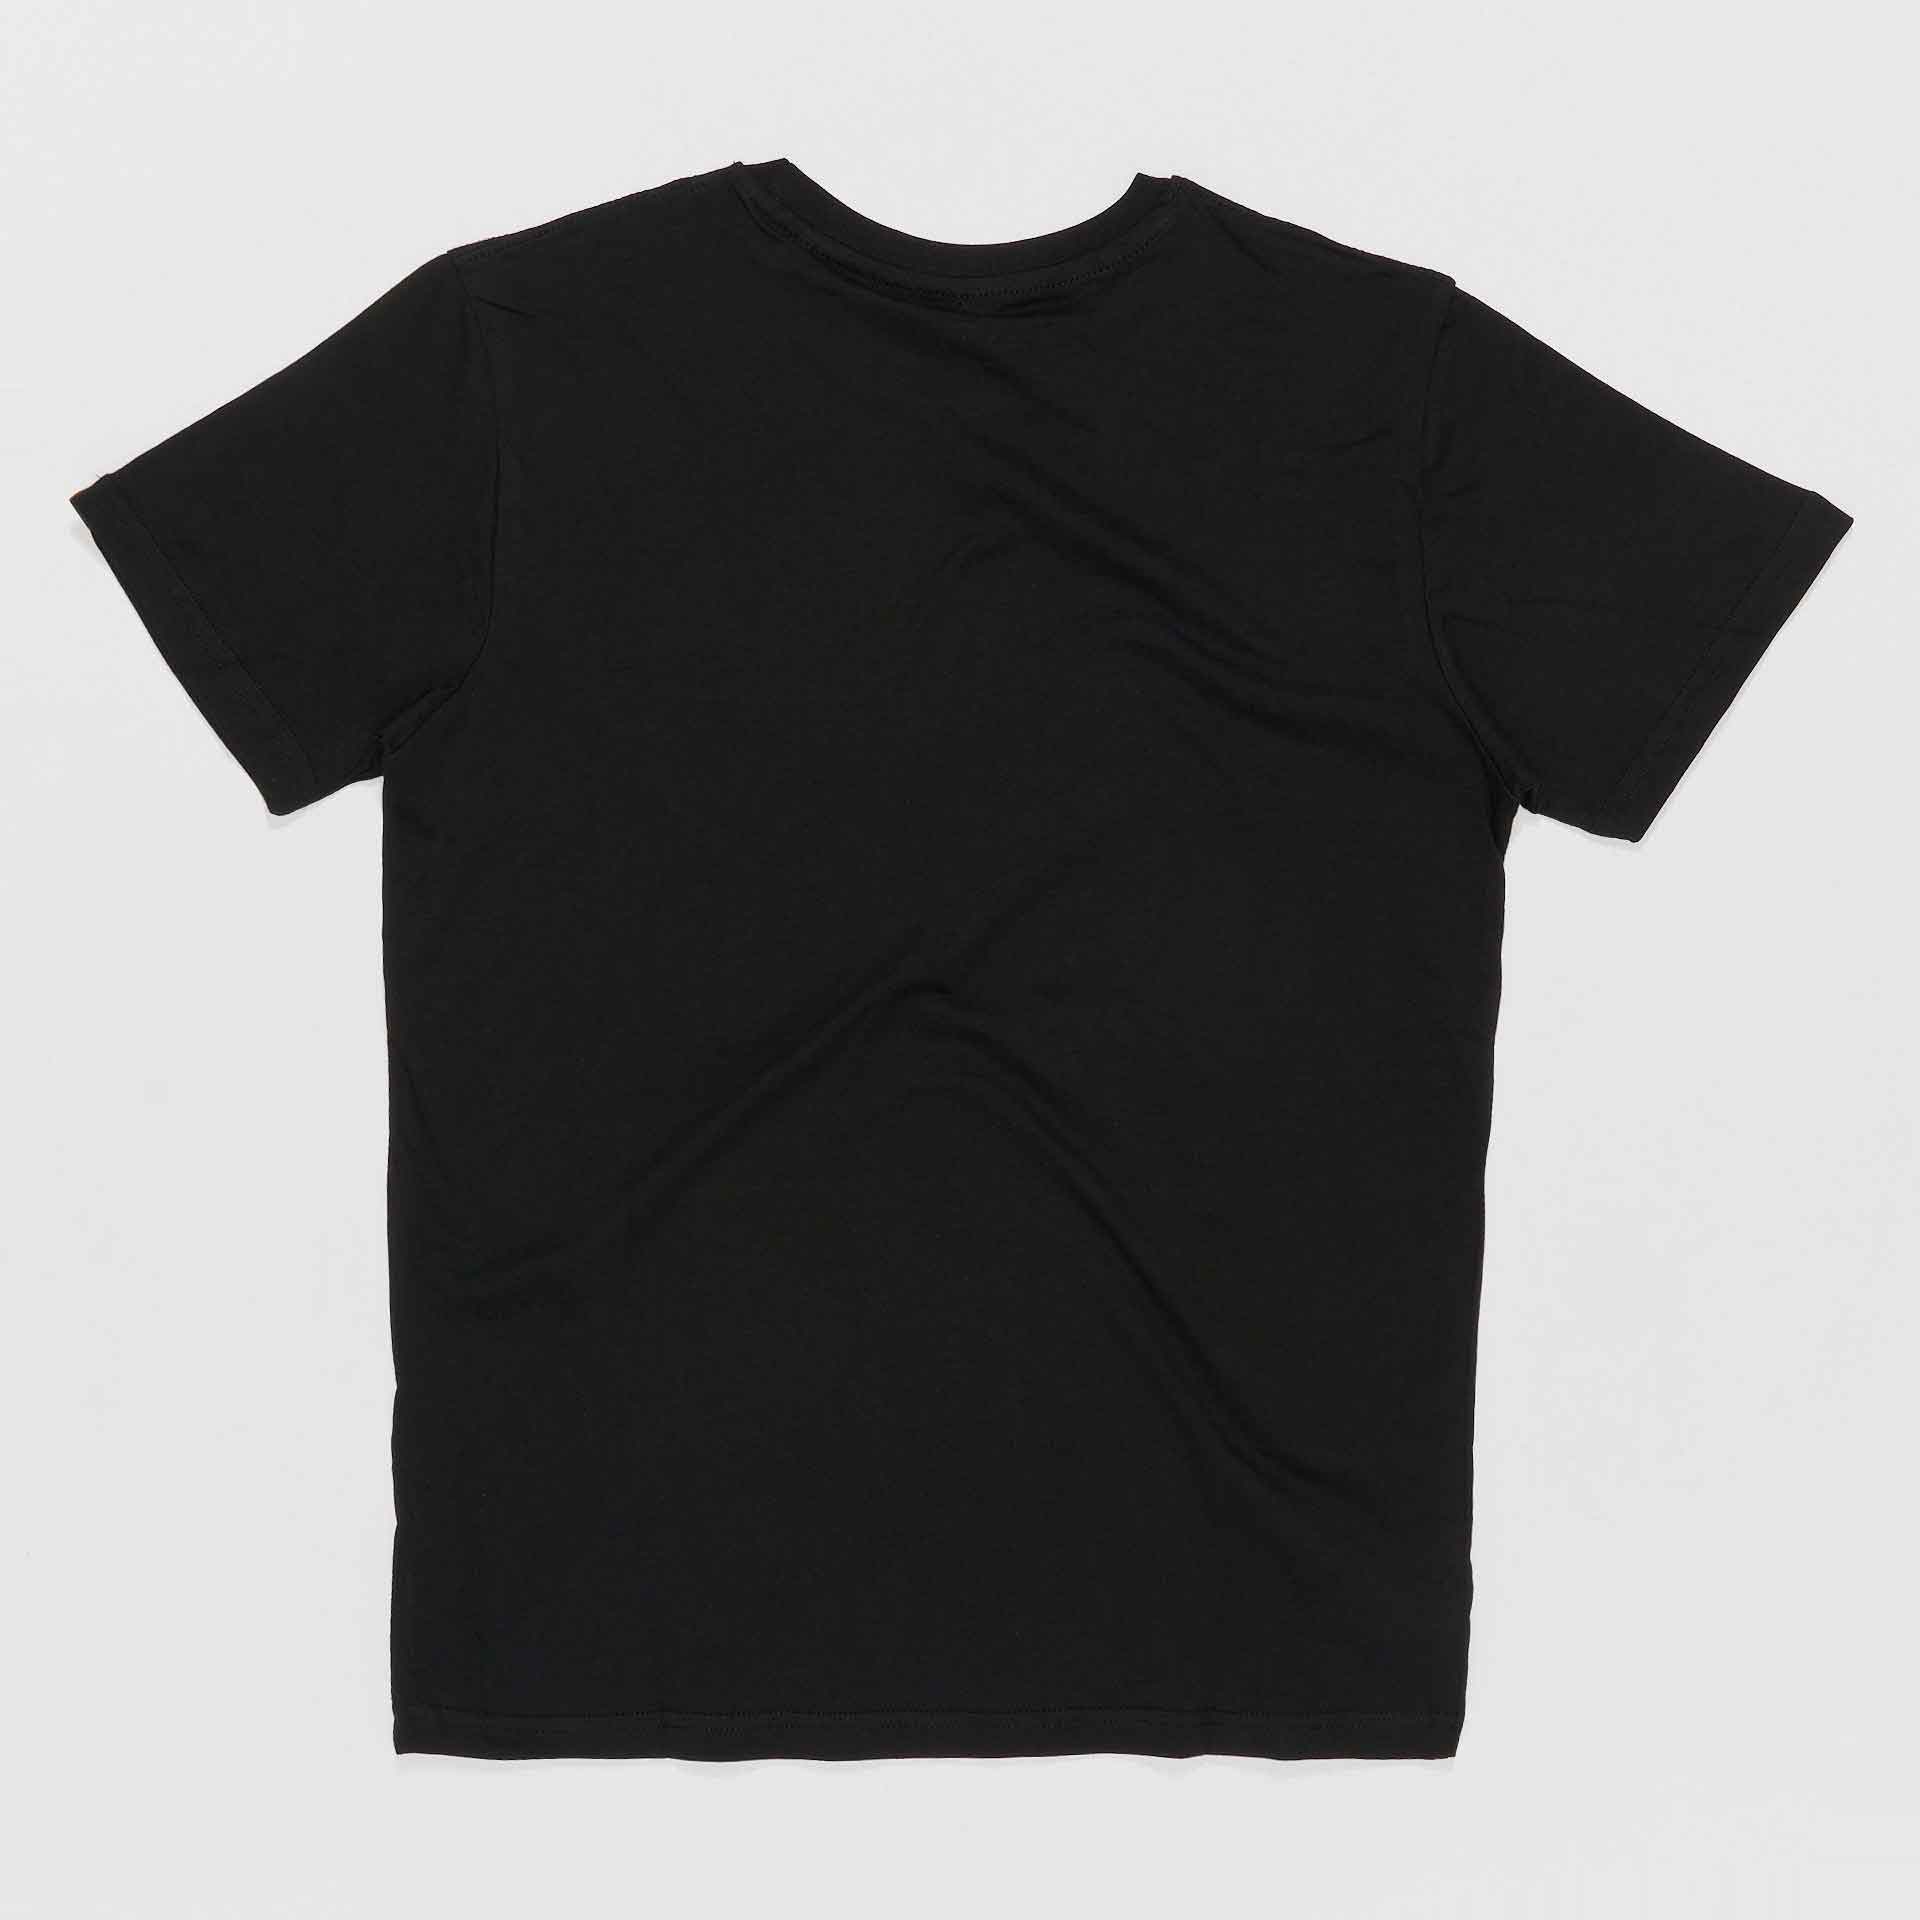 Alpha Industries Basic T-Shirt Neon Print Black/Neon Orange